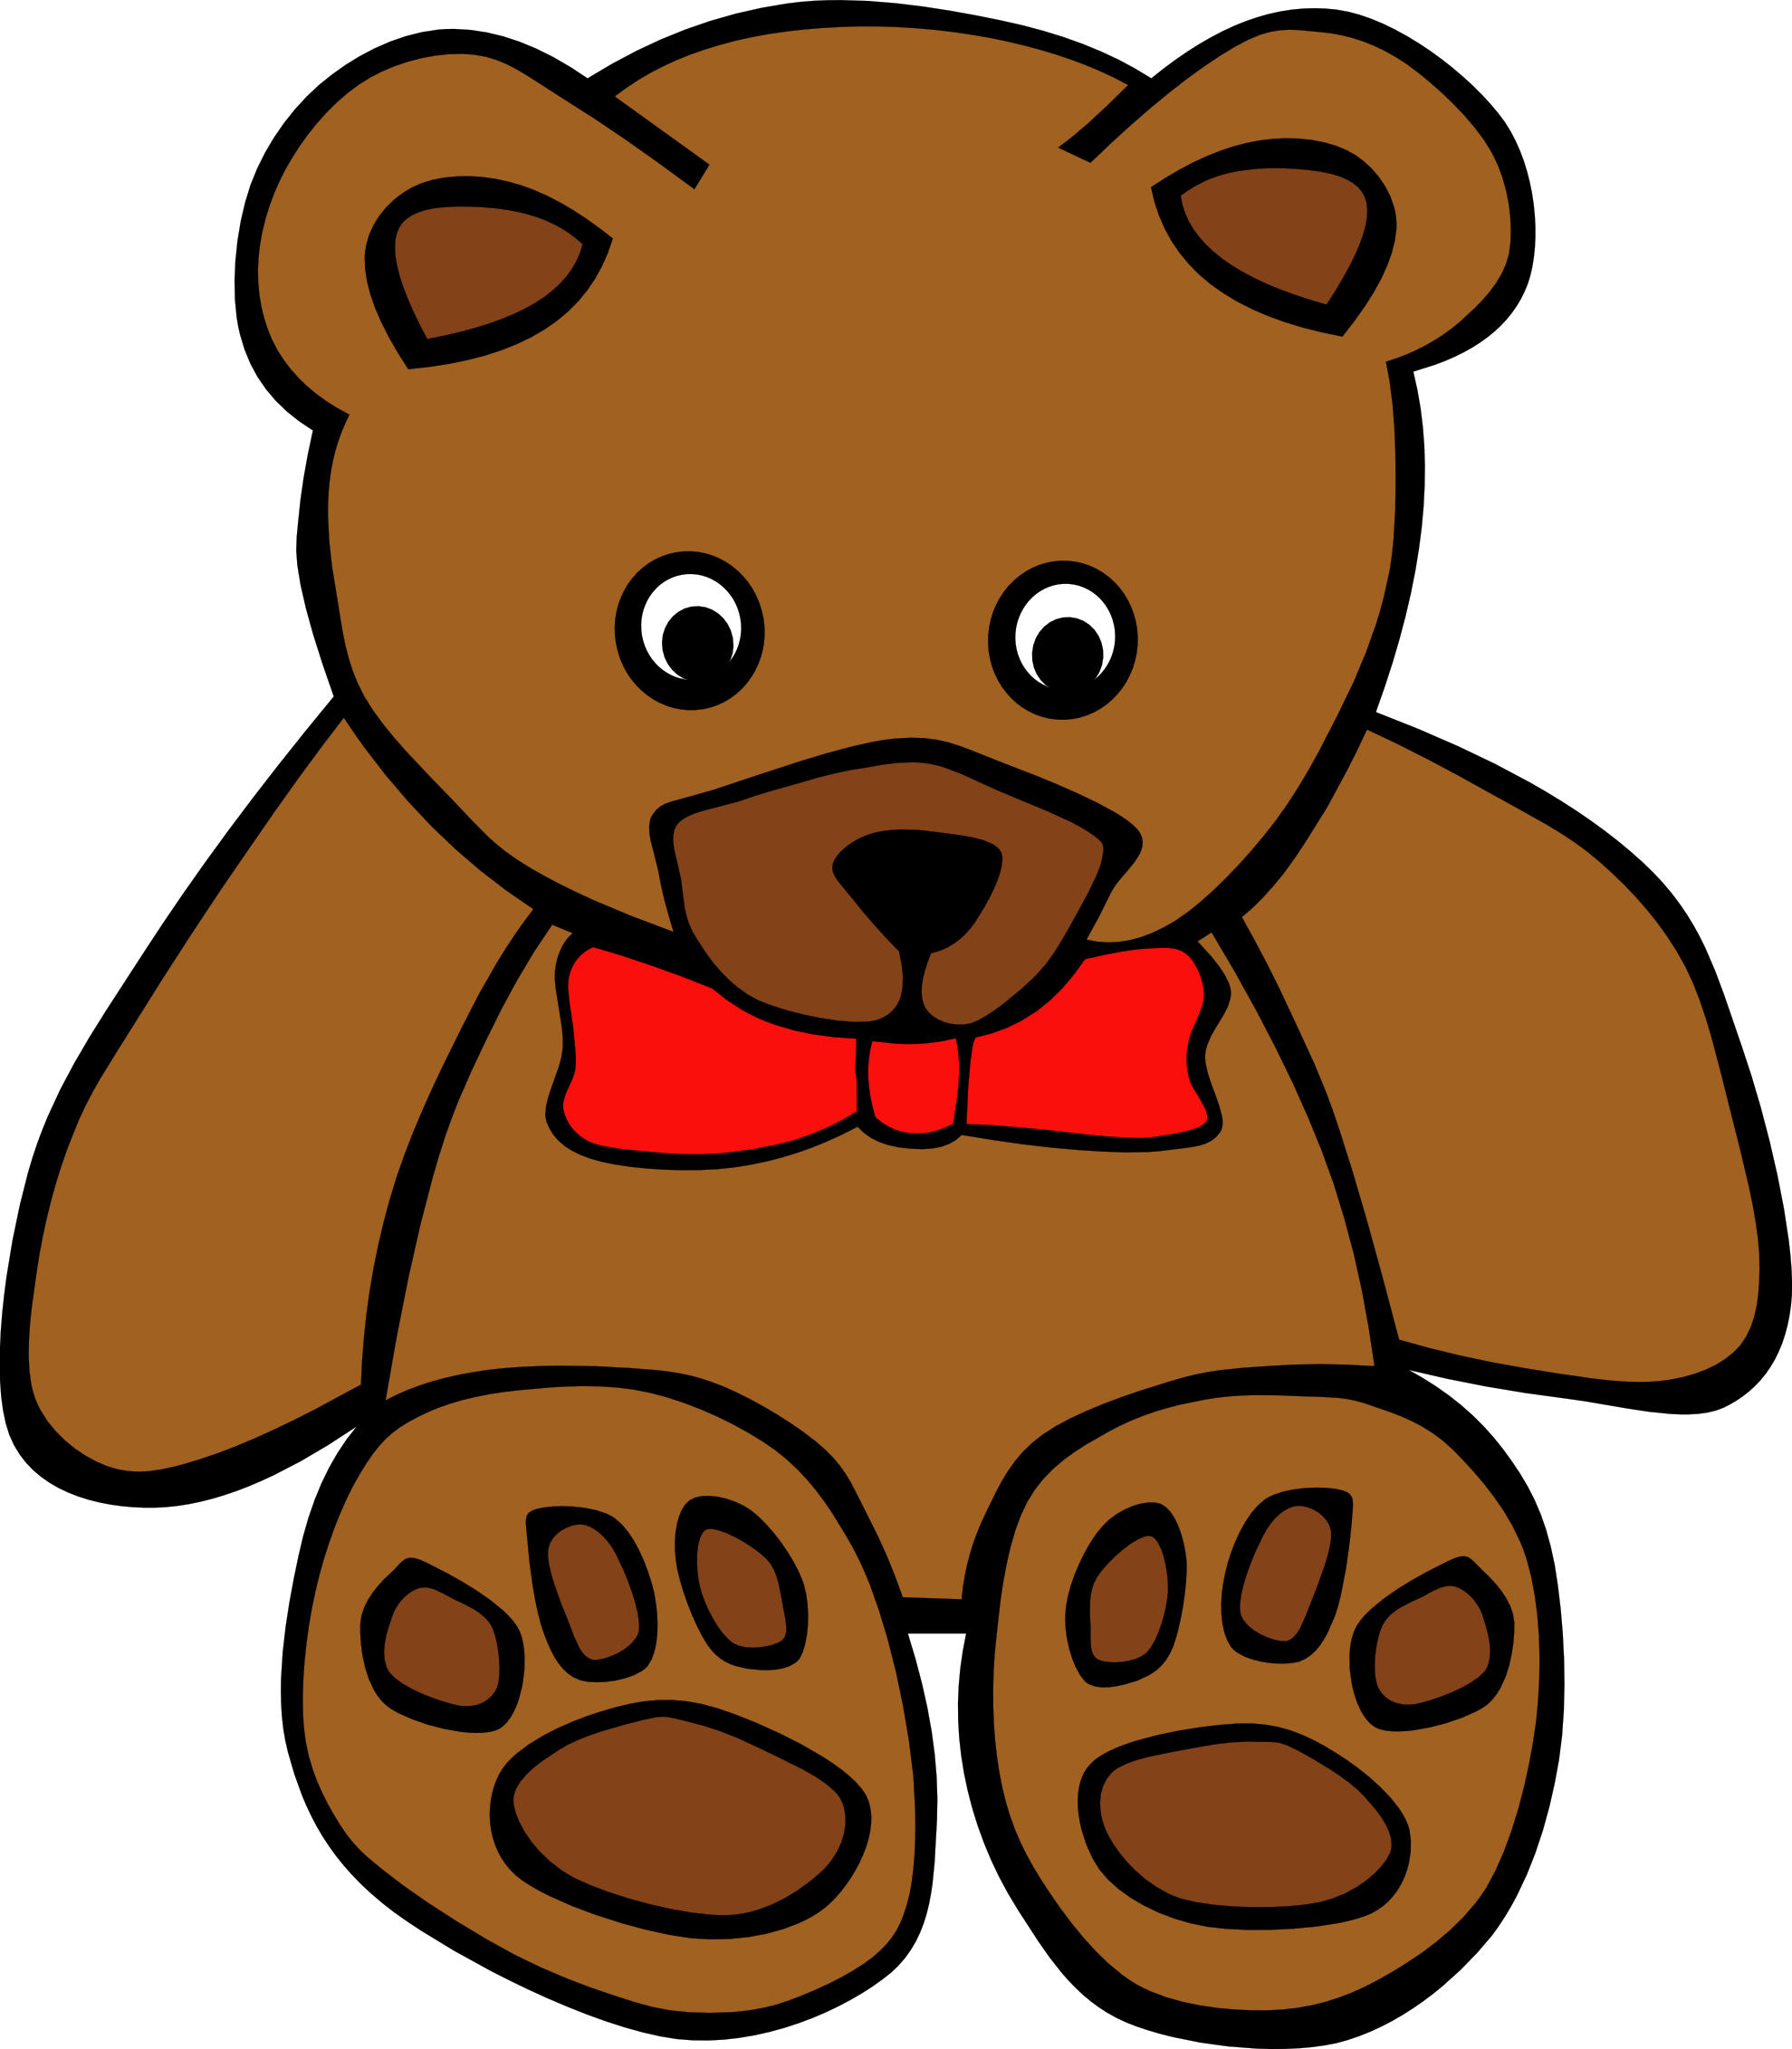 Cute bear cute teddy bear clipart clipart kid 4 image #40164